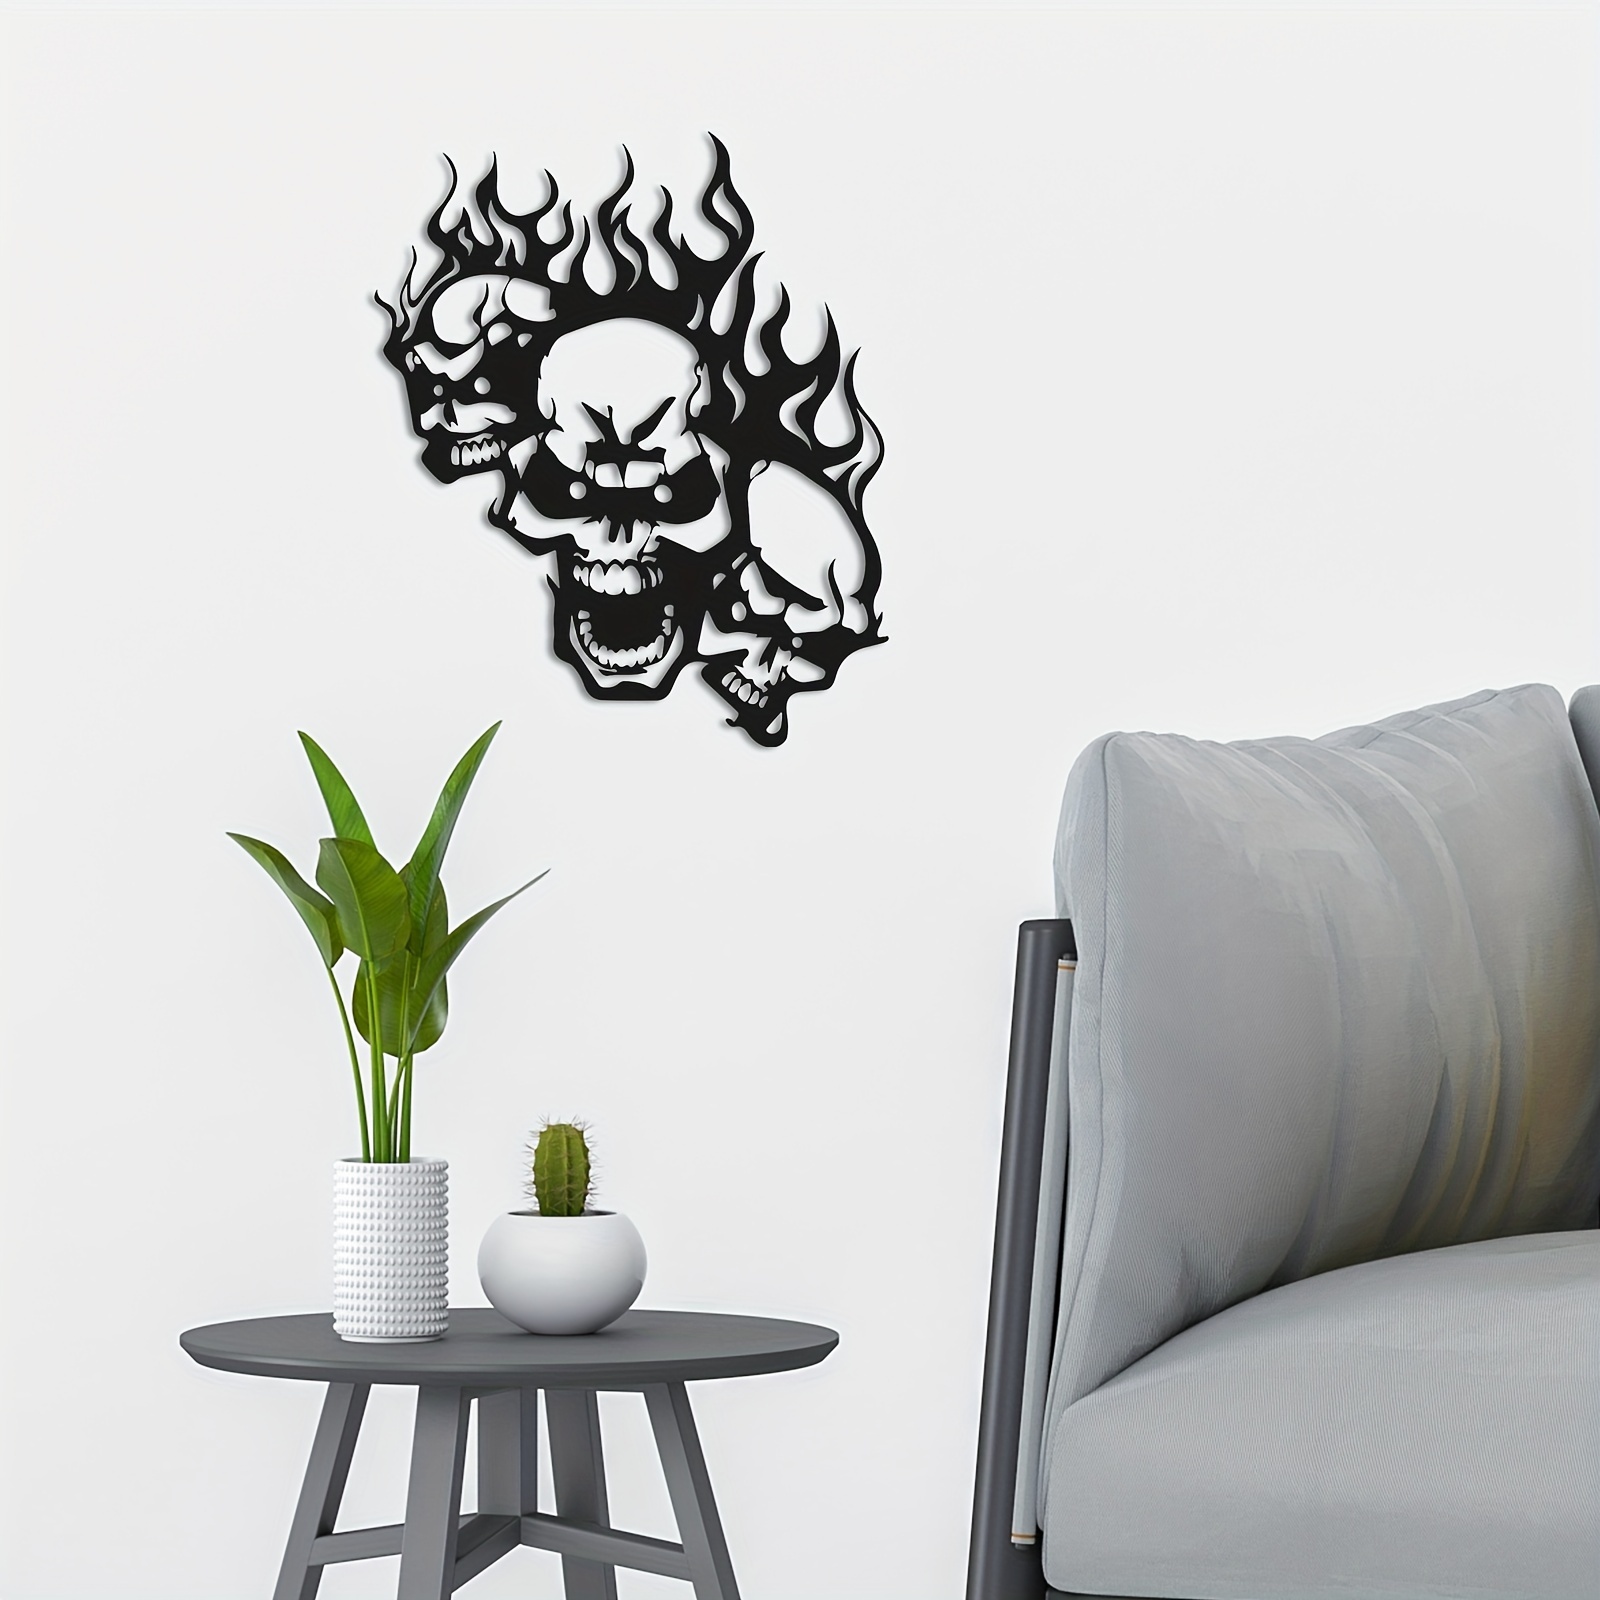 Elder Emo Skull Wall Art Home Decor Gifts Funky Passive - Temu